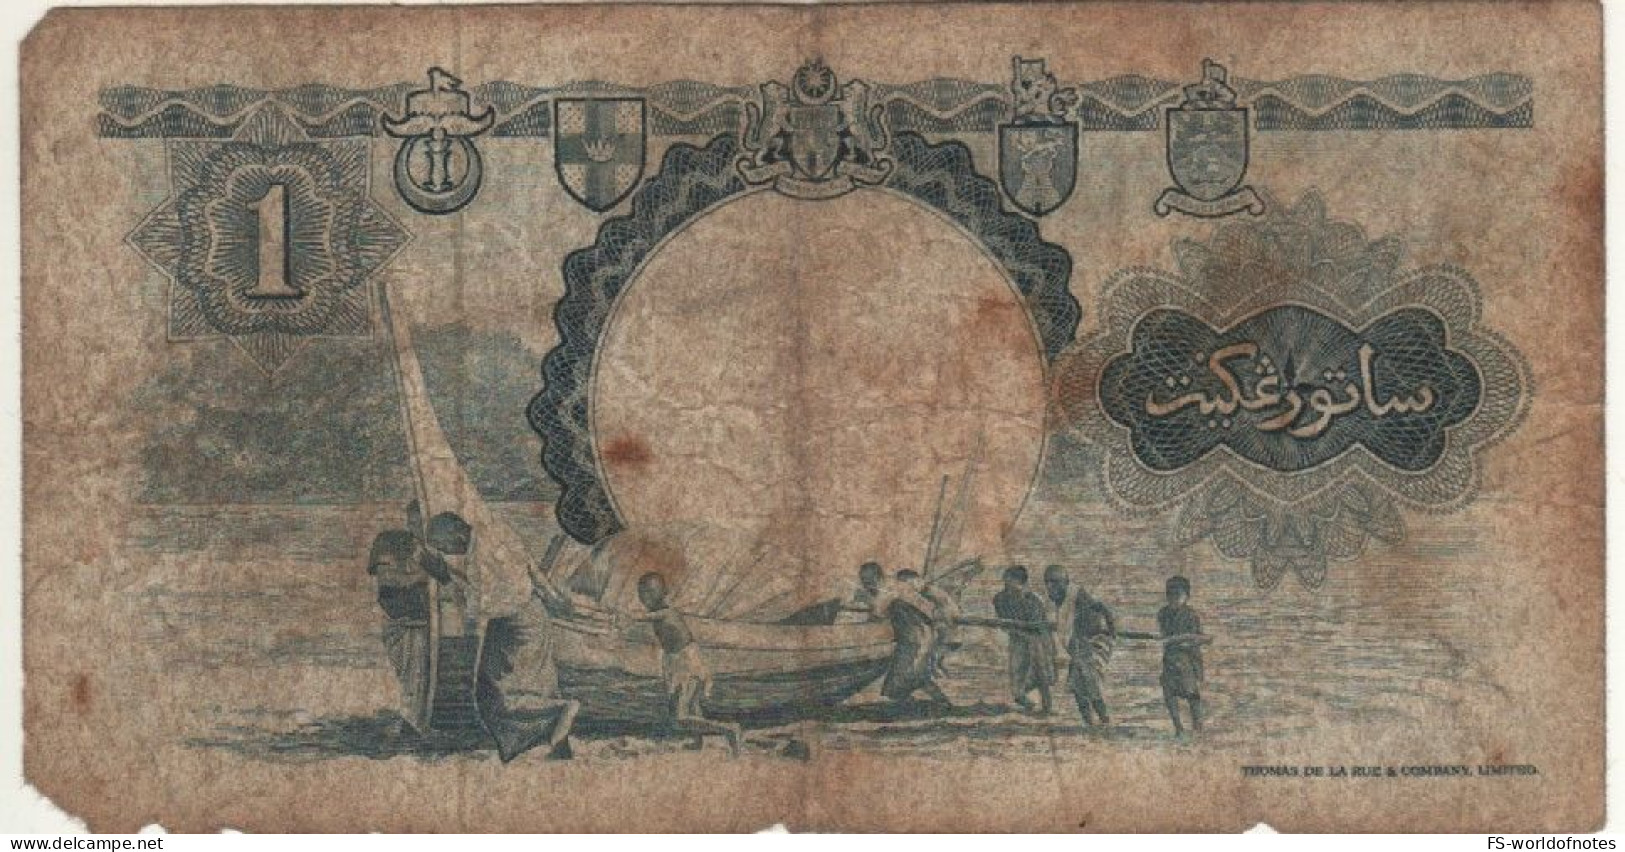 MALAYA & British BORNEO    1 Dollar     P8A  Dated  1st March 1959  ( Thomas De La Rue    Sailing Boat ) - Maleisië